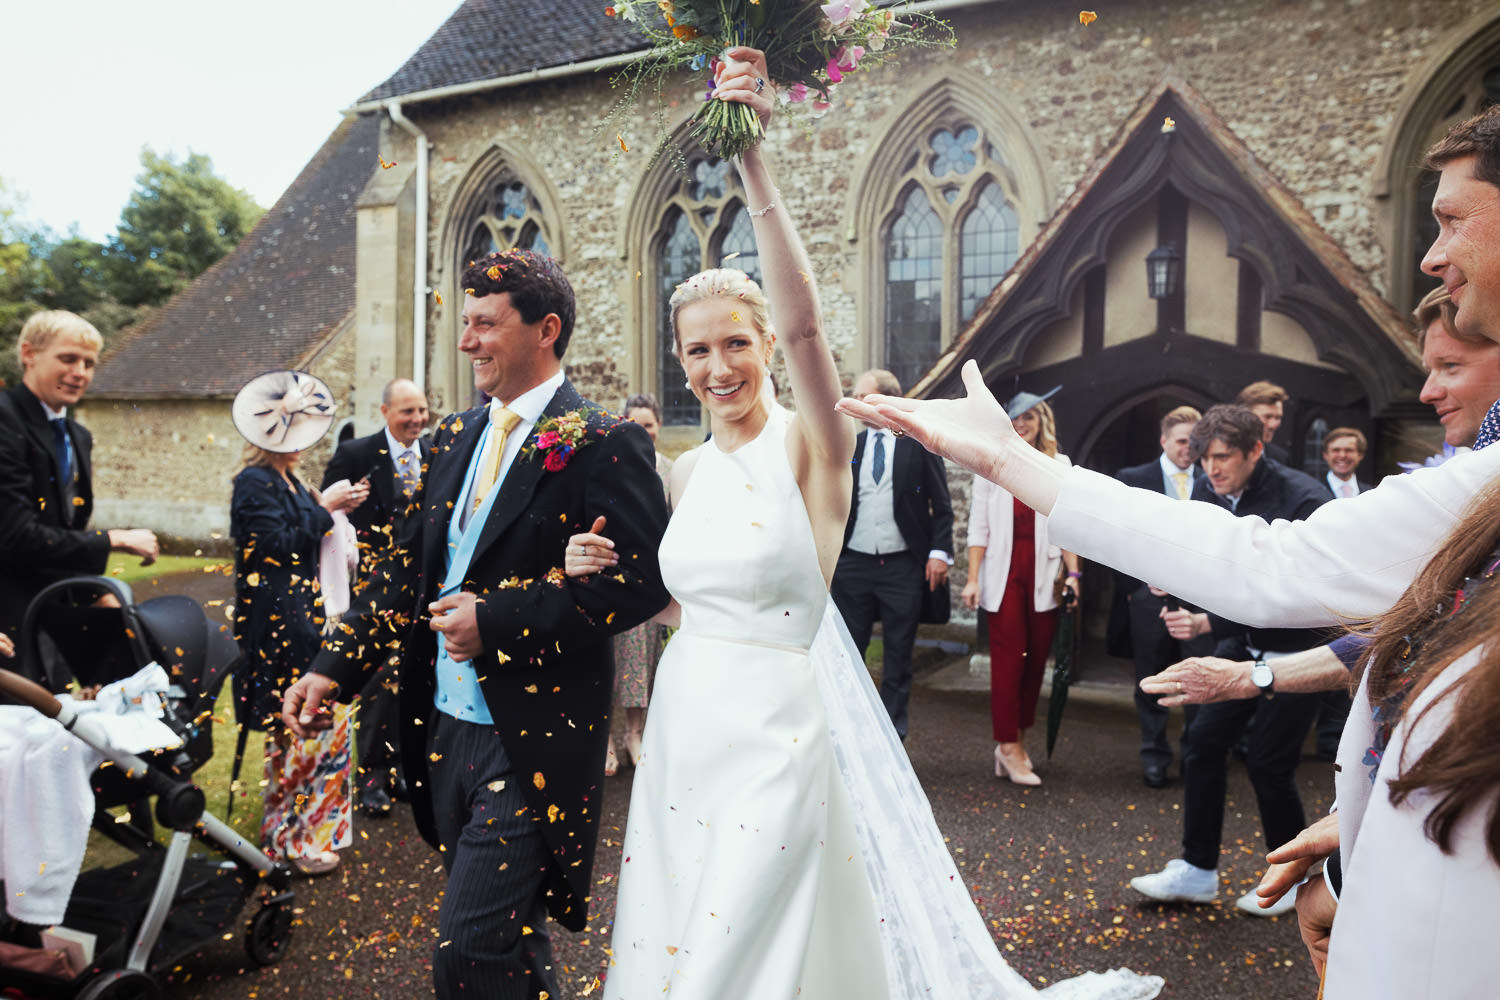 A bride wearing a wedding dress from Miss Bush walks through a shower of confetti with her husband. At Parish Church of St John Baptist in Danbury Essex.